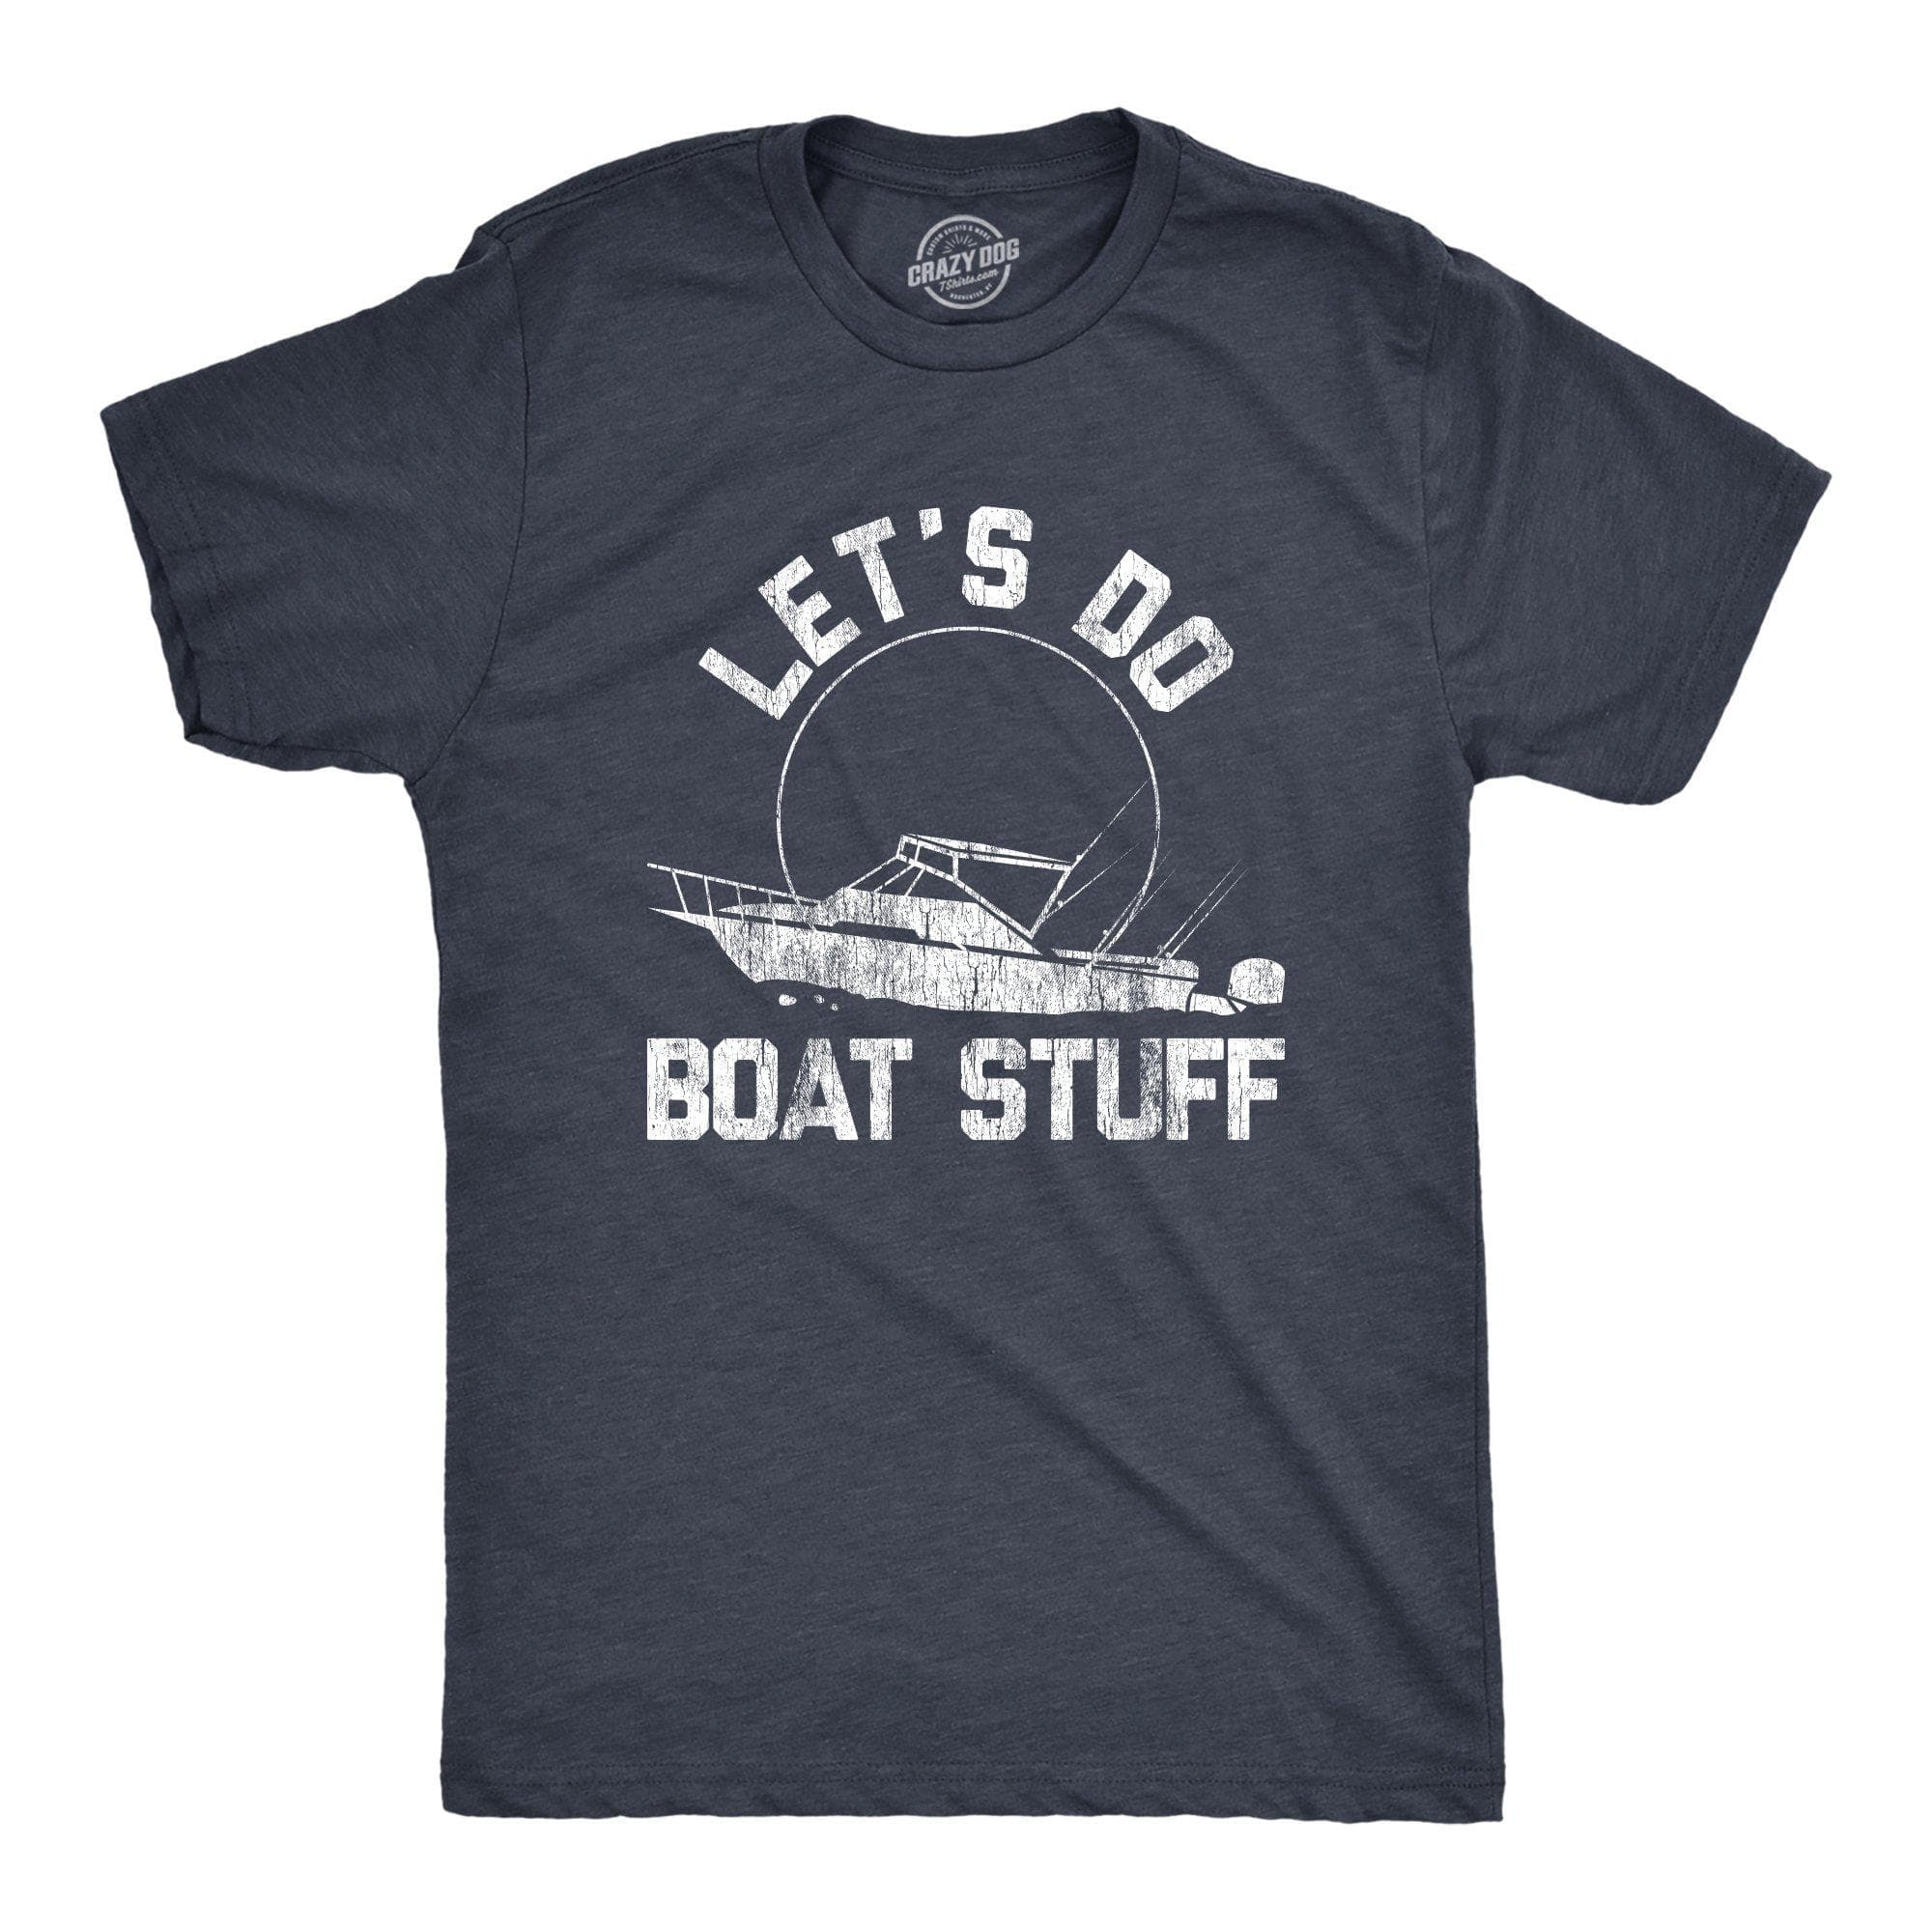 Crazy Dog T-Shirts Size Matters Fish T Shirt Funny Fishing Shirt